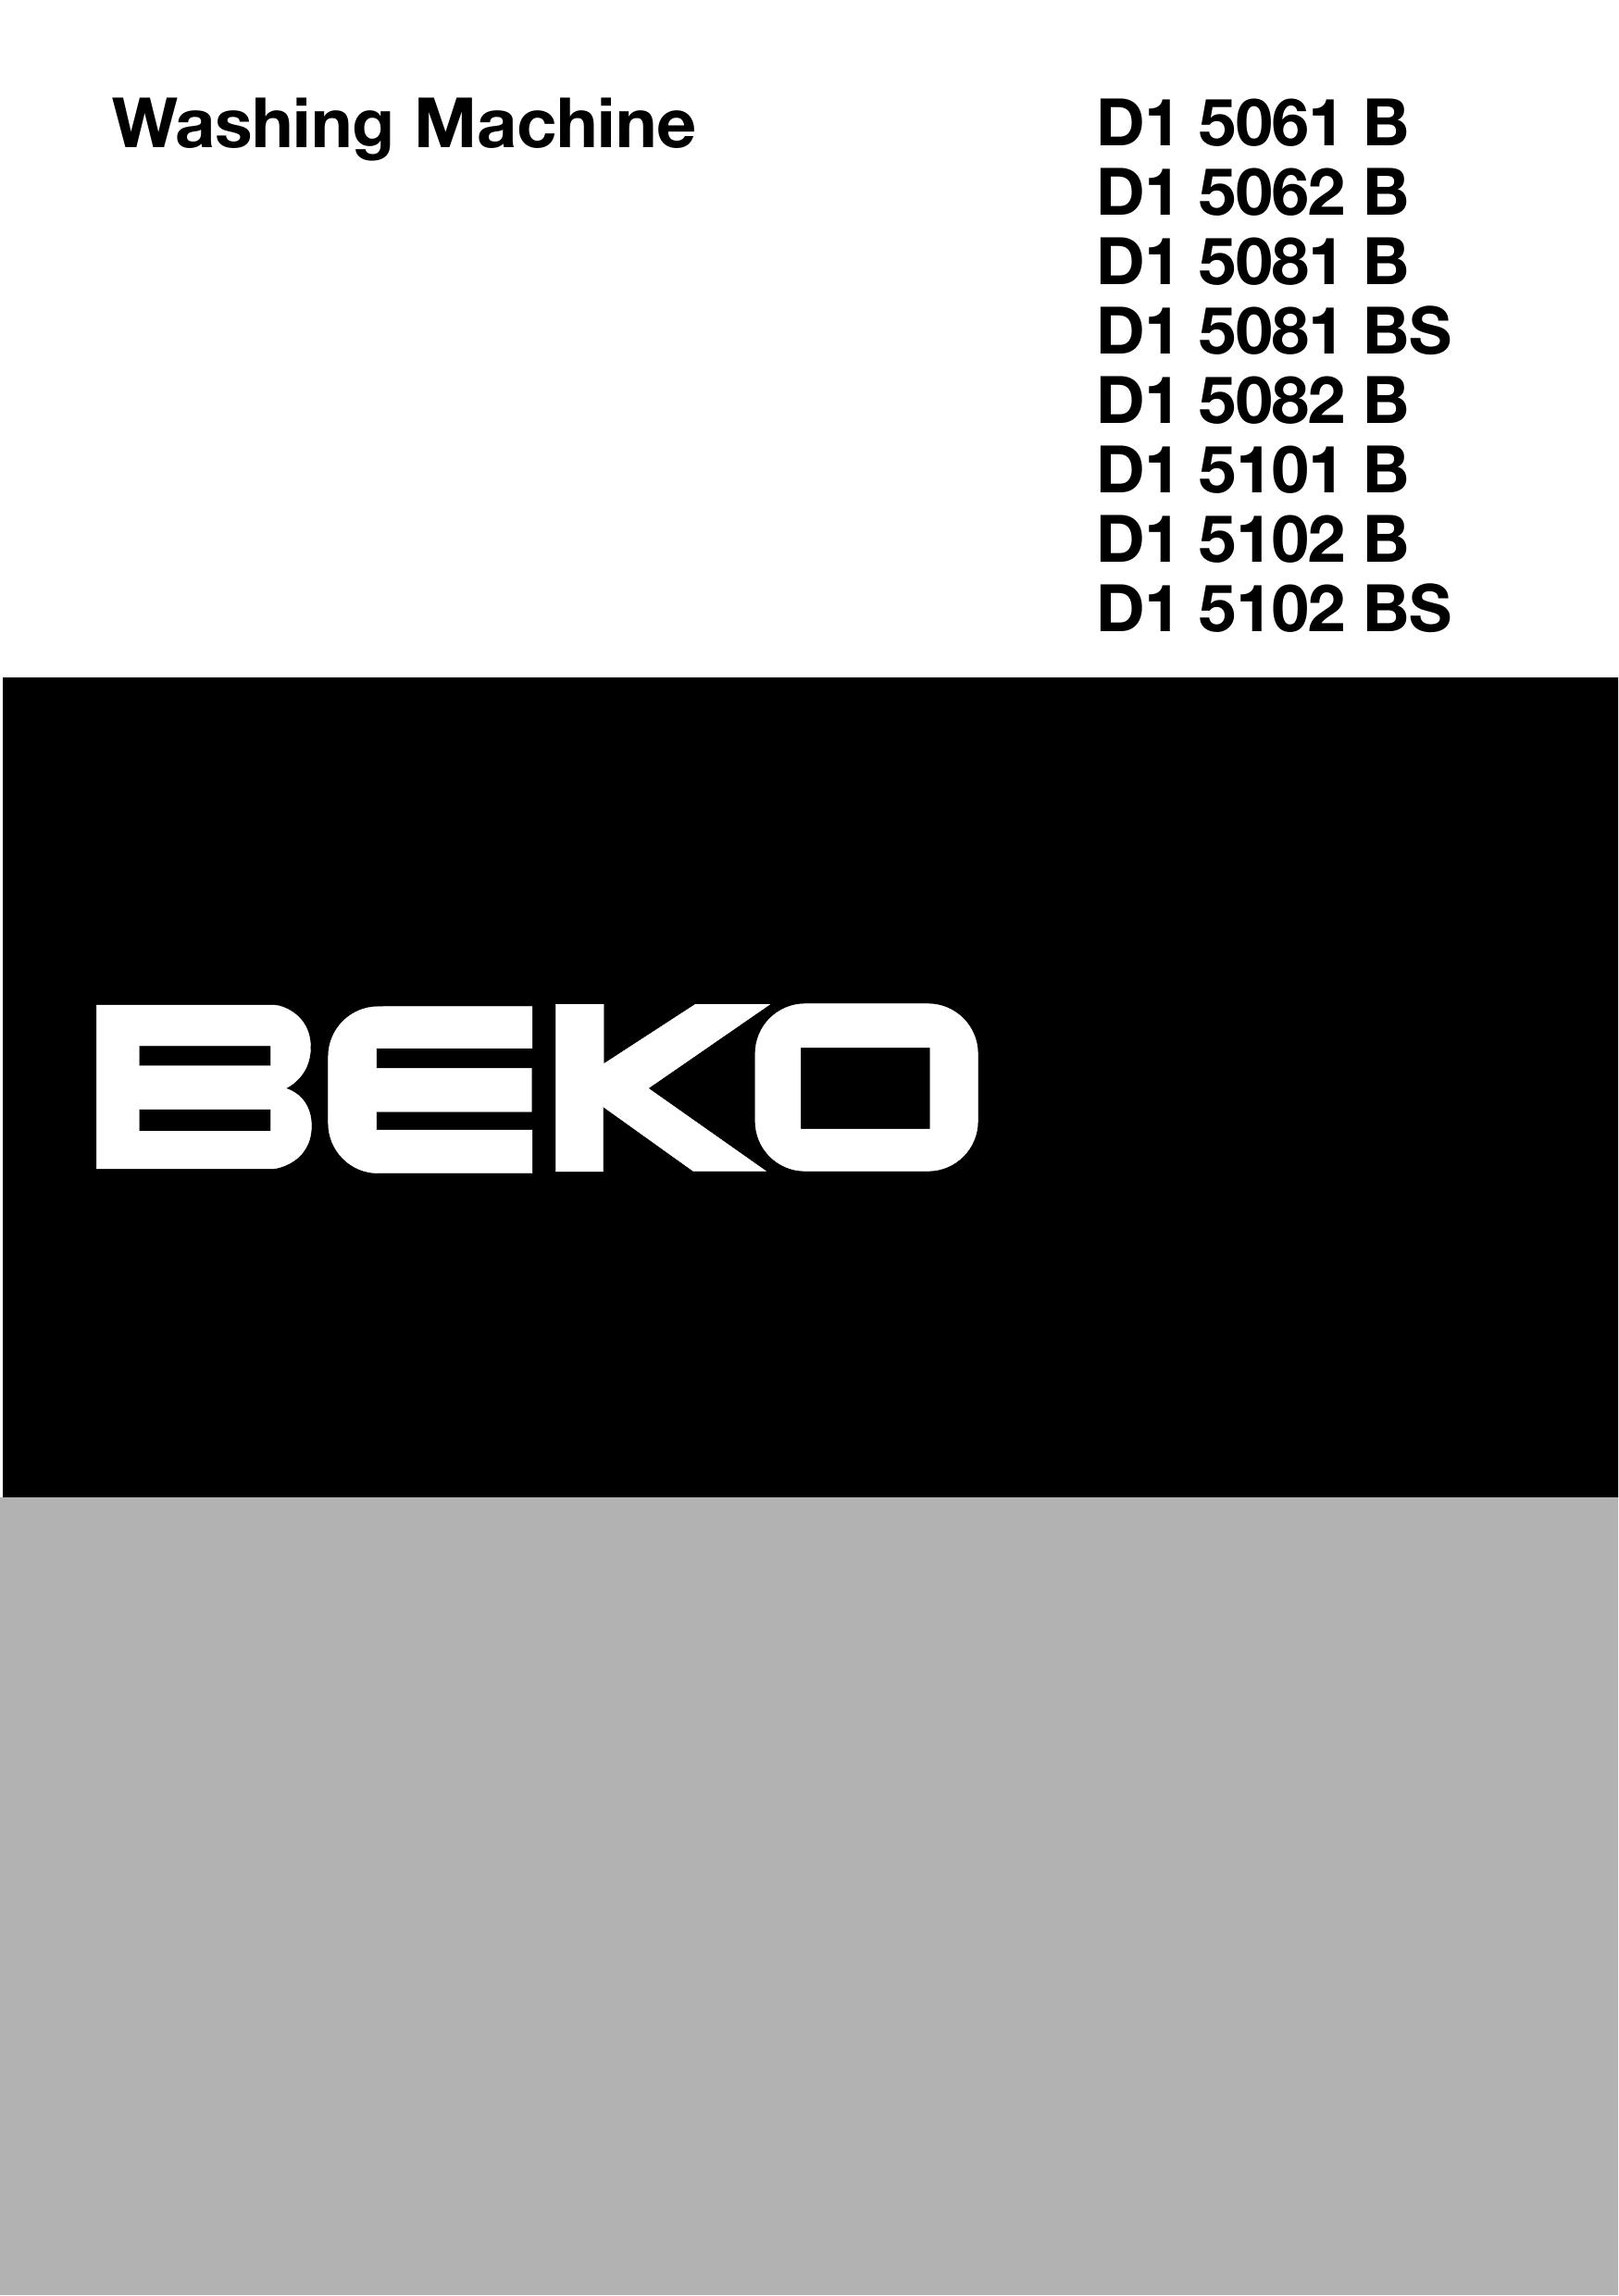 Beko D1 5082 B Washer User Manual